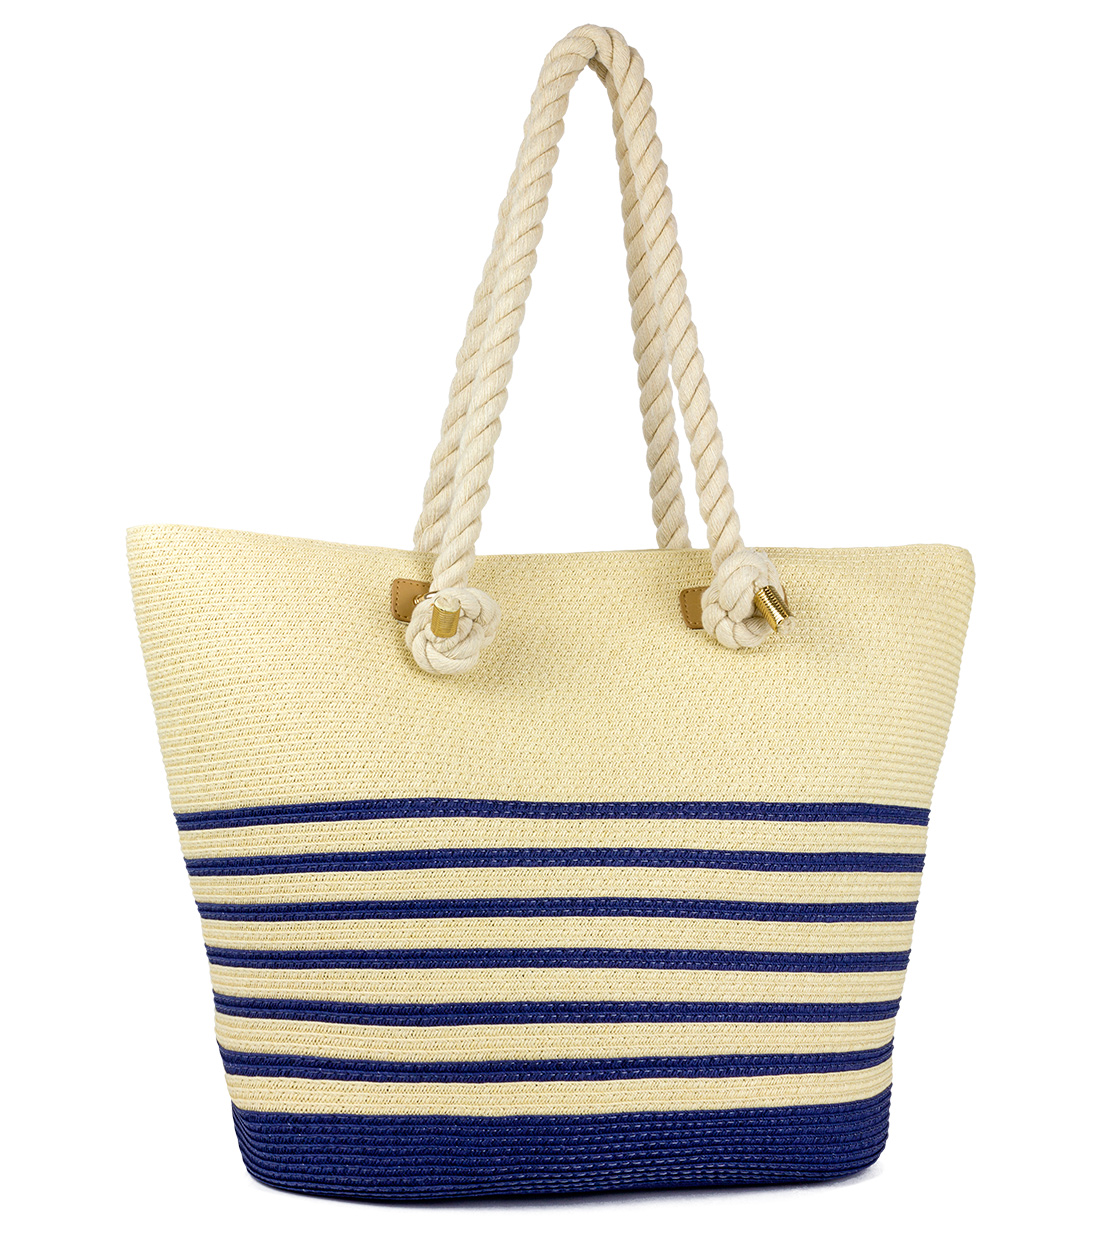 Magid Women's Adult Paper Straw Beach Bag Navy - image 1 of 1